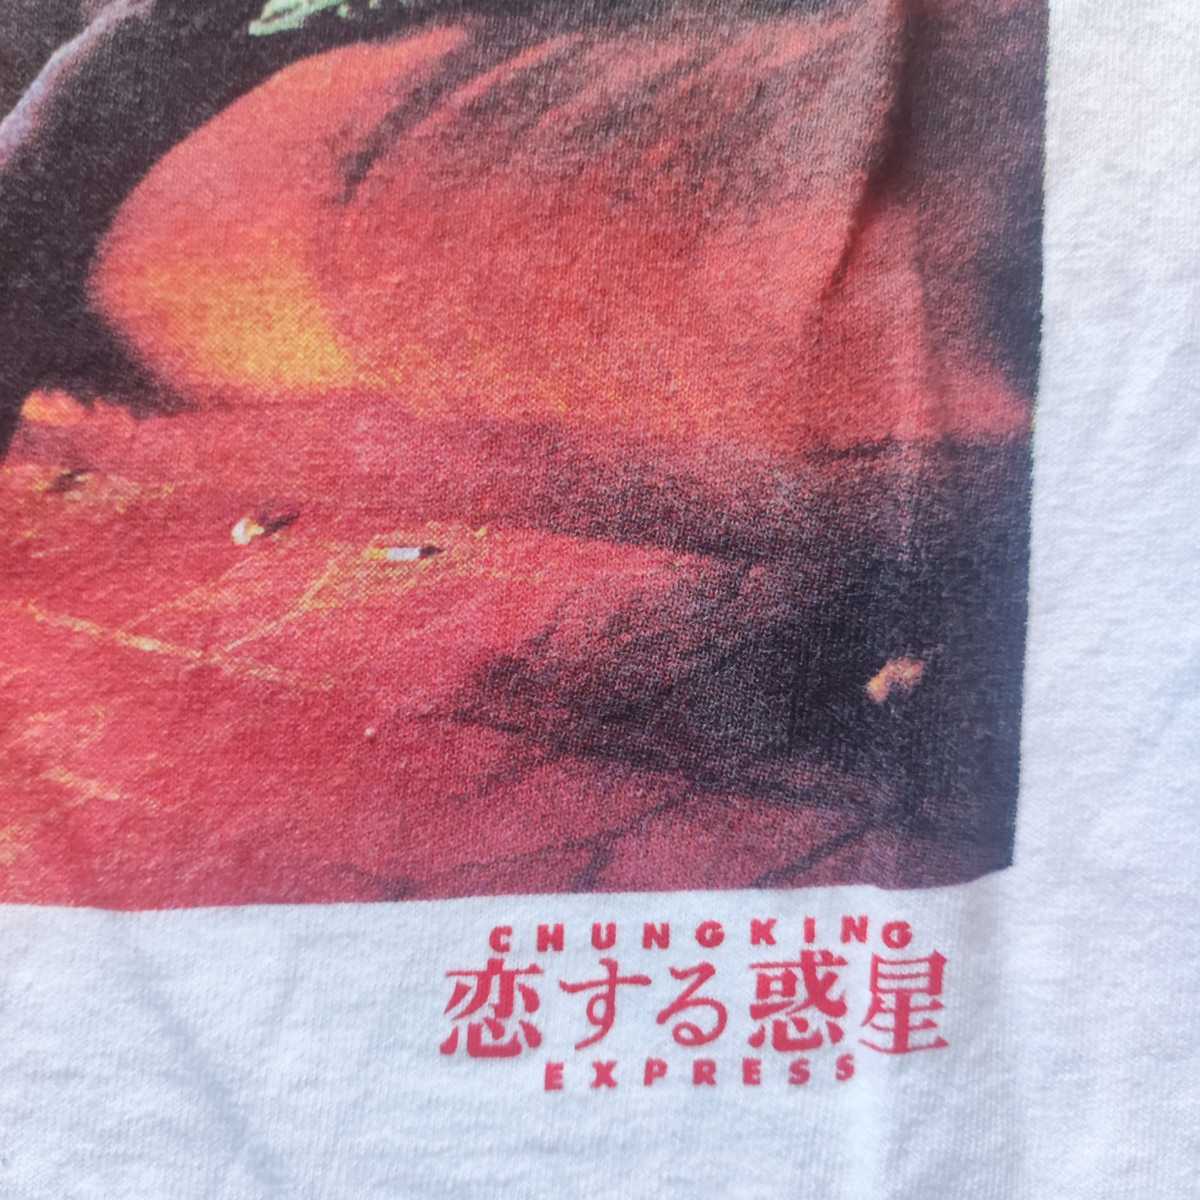 [1995 год оригинал ] фильм [. делать планета ] Vintage футболка USA производства won* машина waifei*won90s б/у одежда Chungking Express